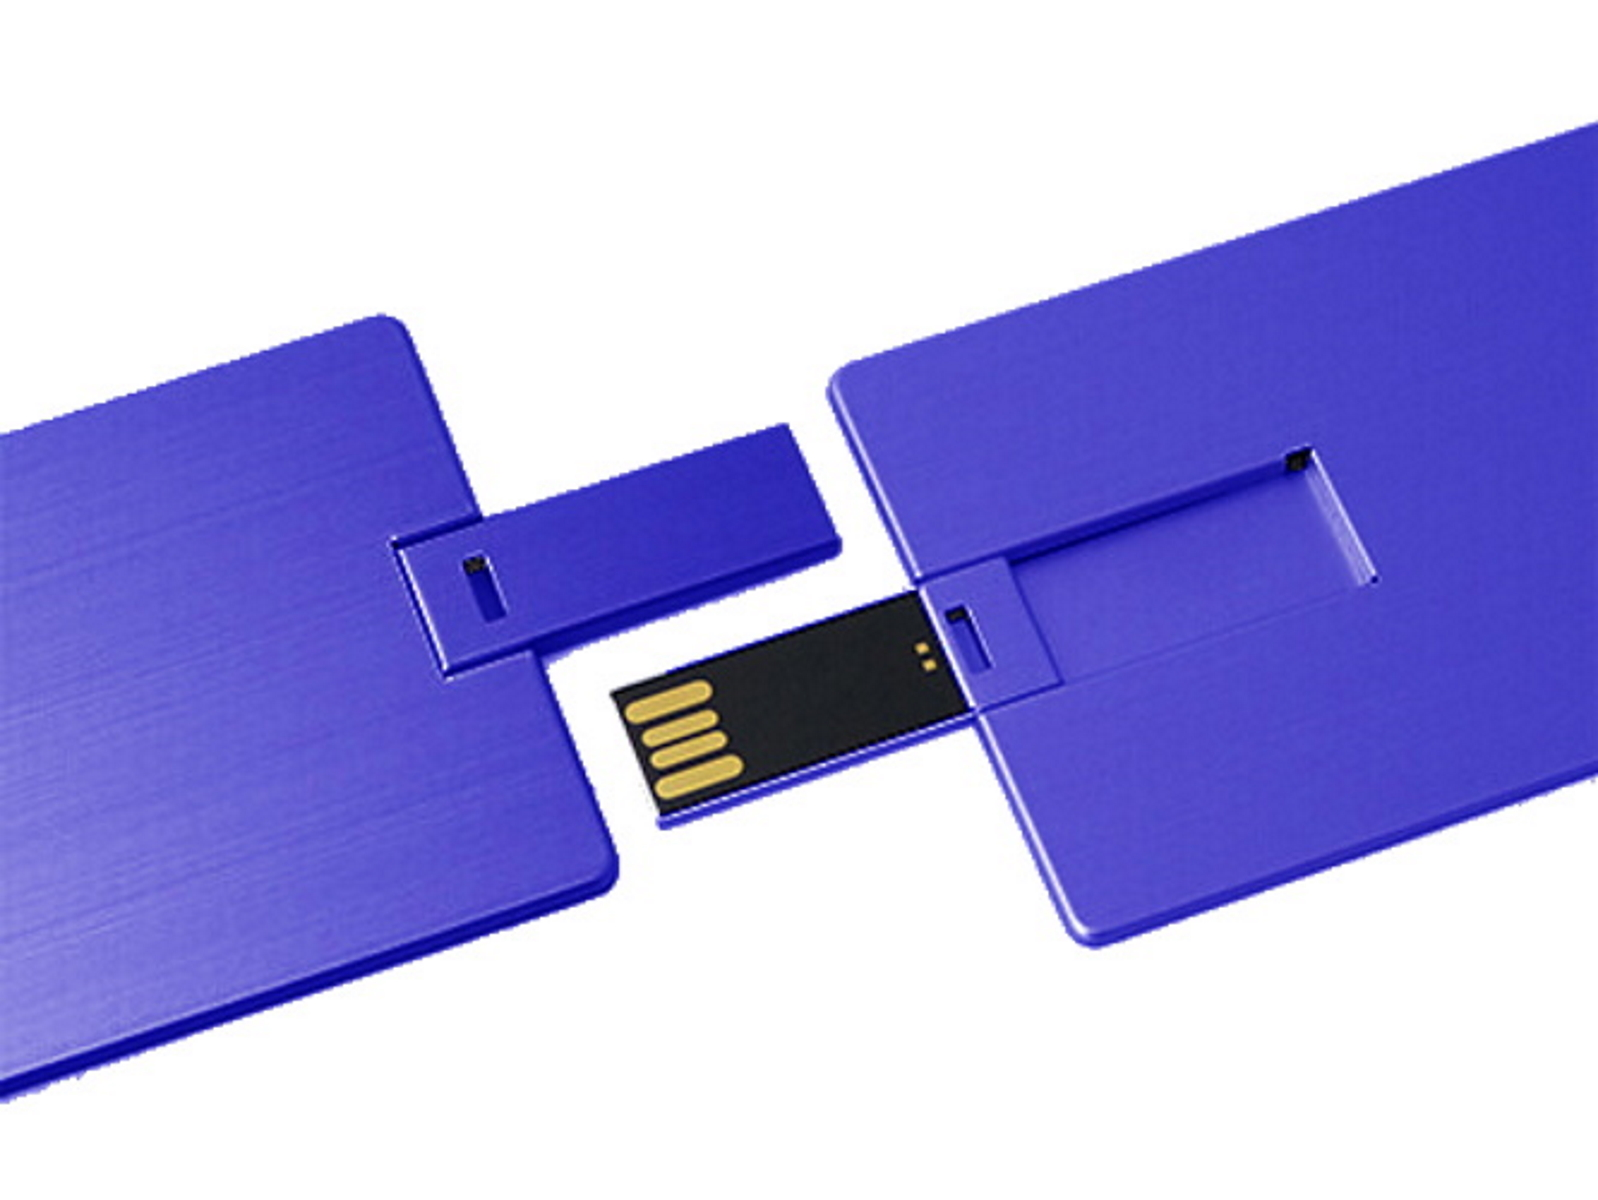 USB GERMANY ® Metall-Kreditkarte (Blau, USB-Stick 1 GB)